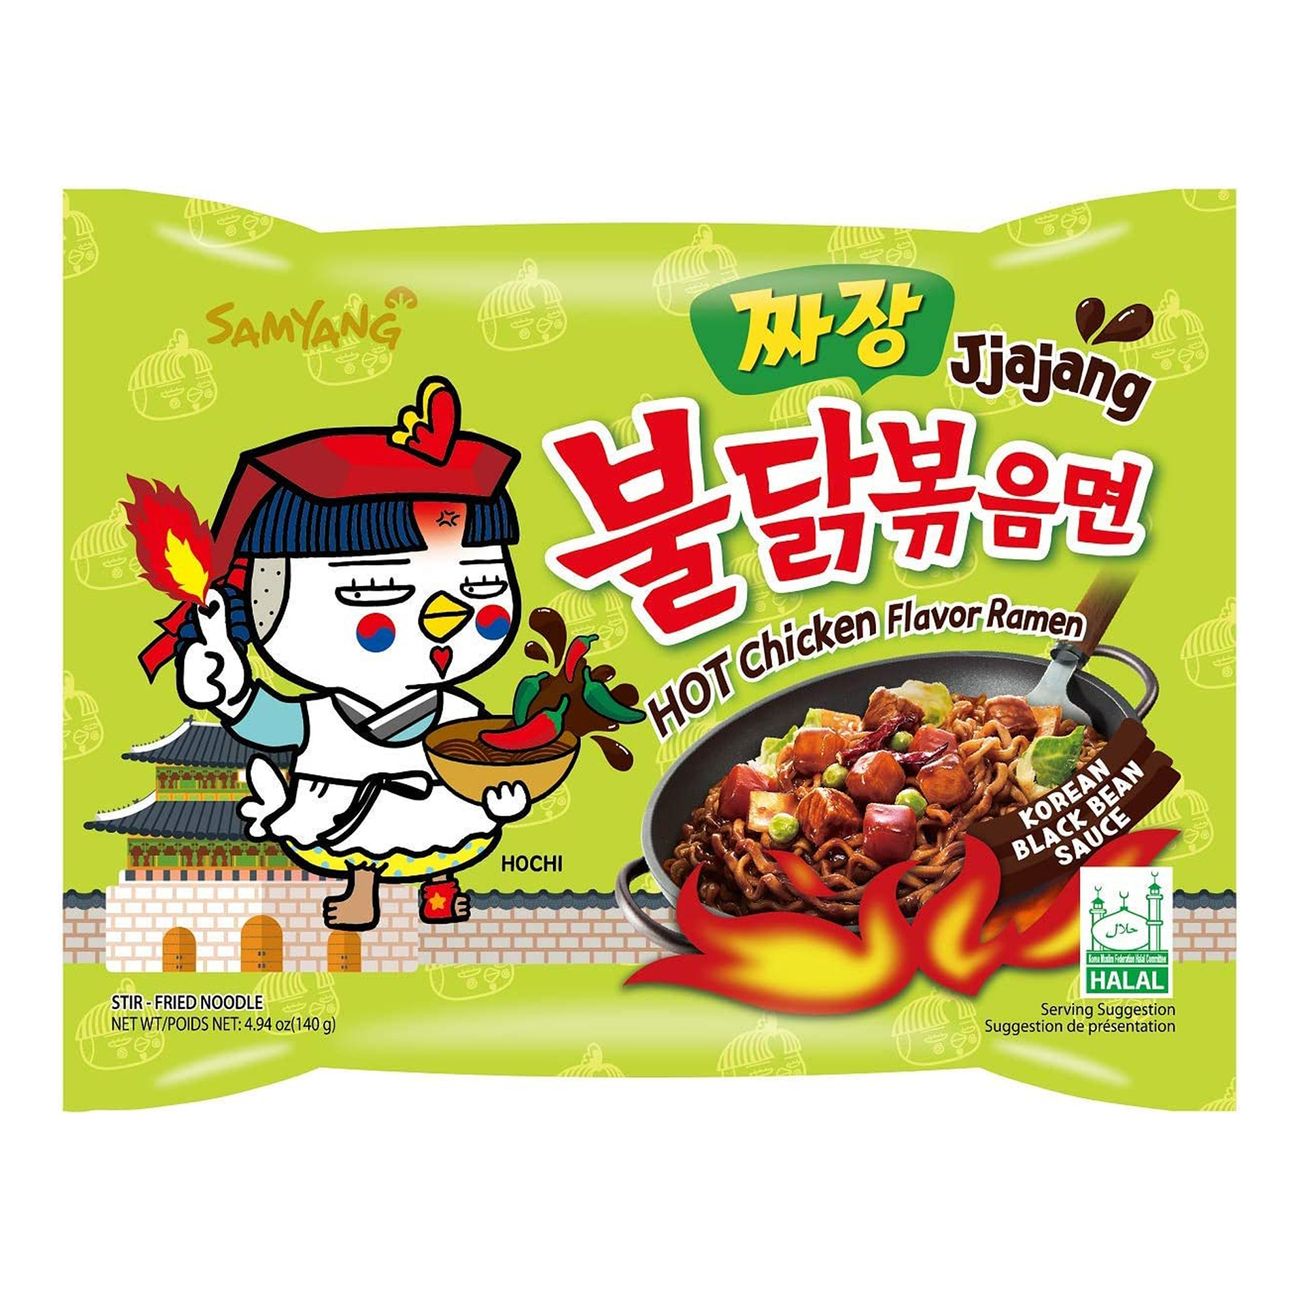 samyang-hot-chicken-ramen-jjajang-91957-2